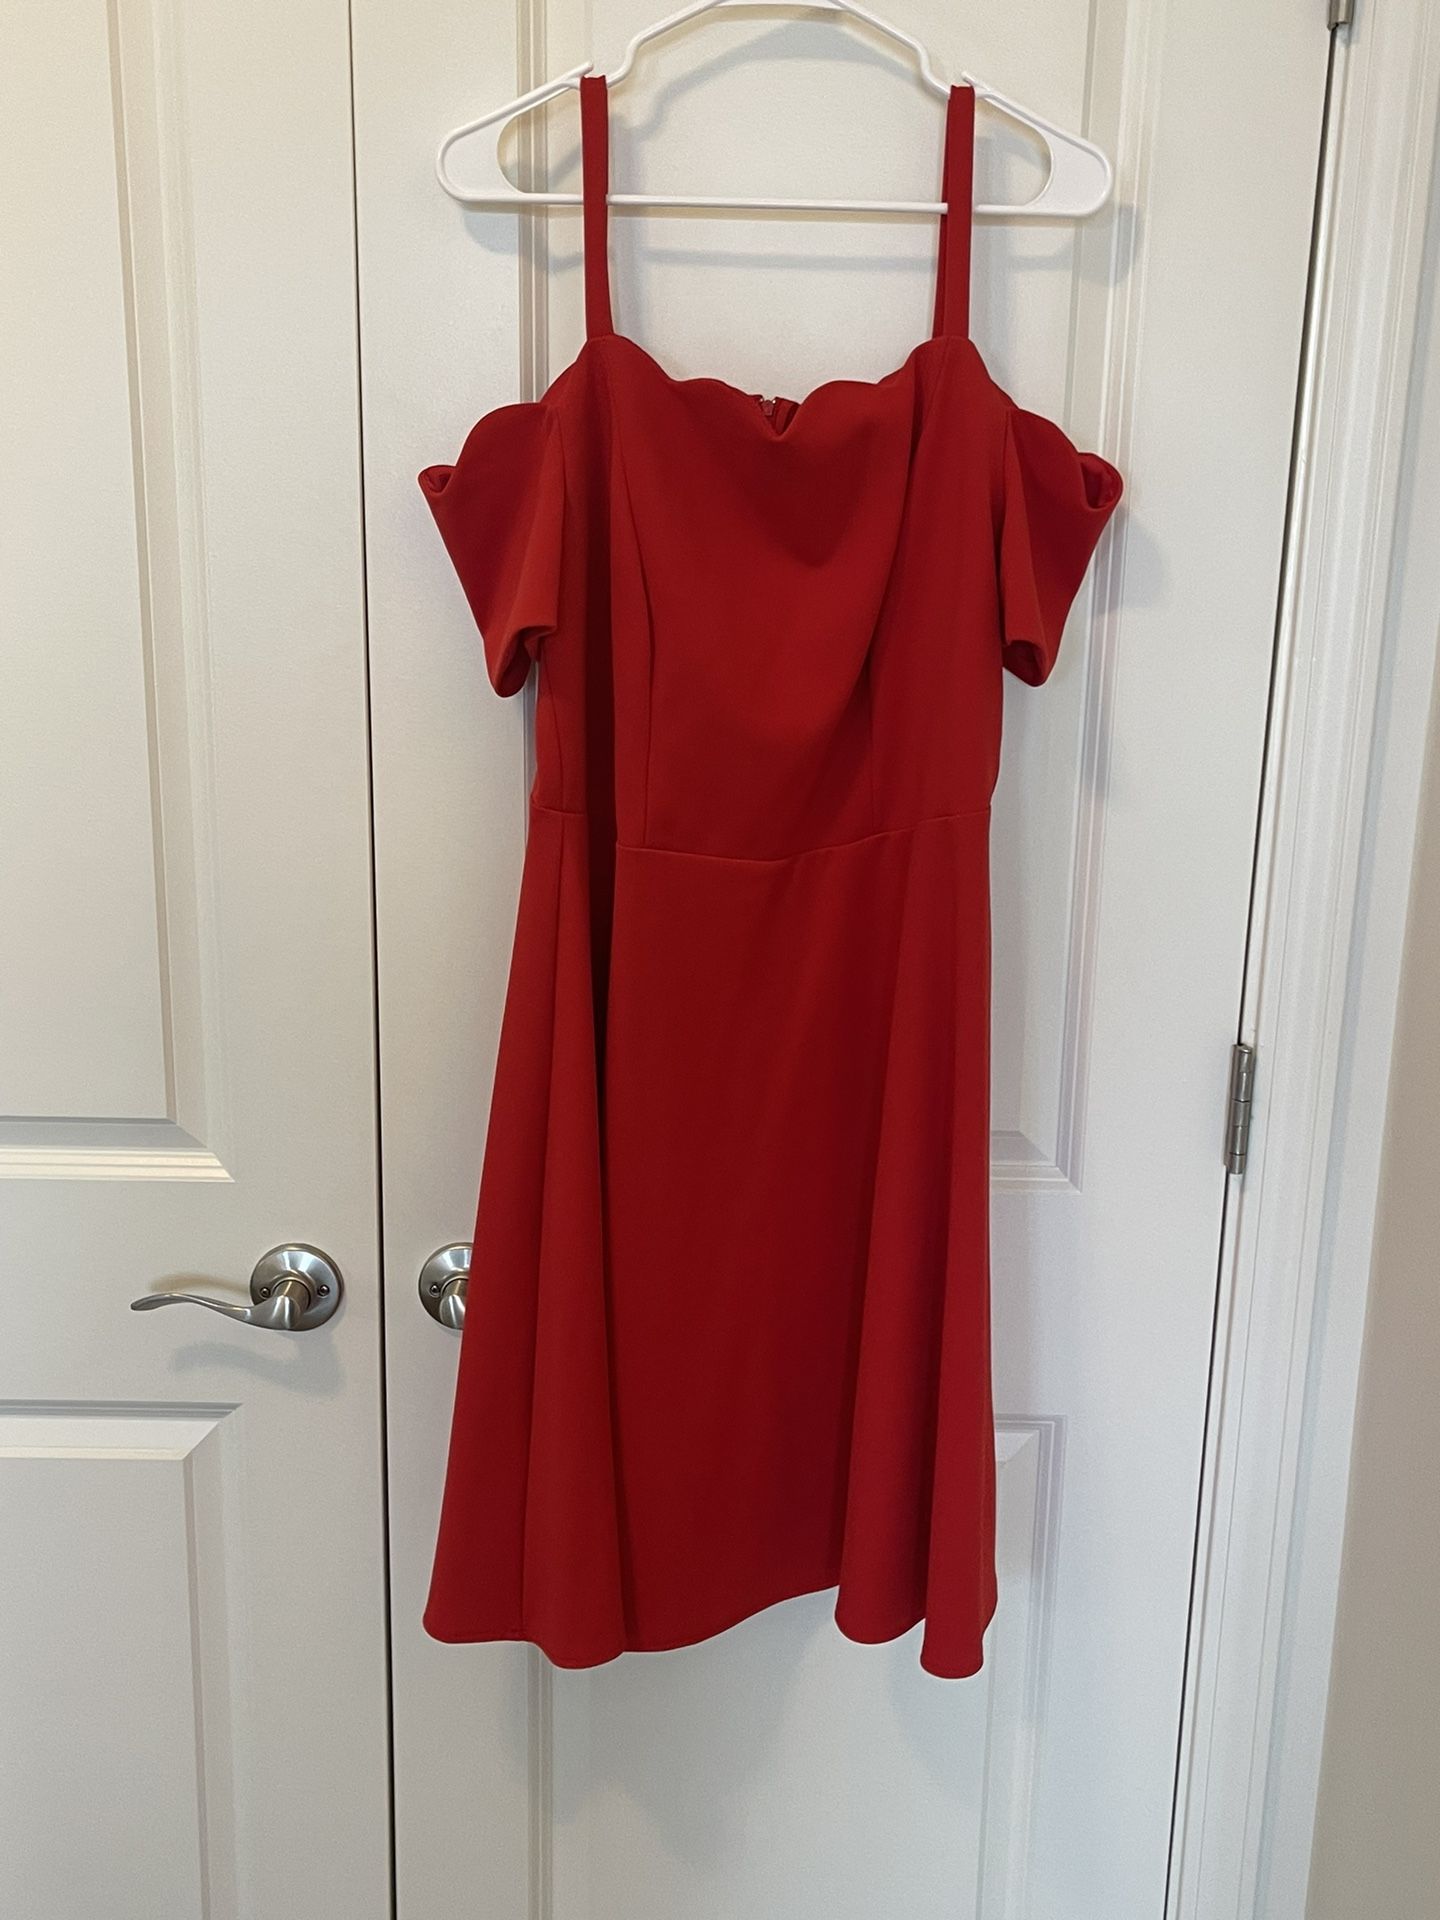 New Red Dress